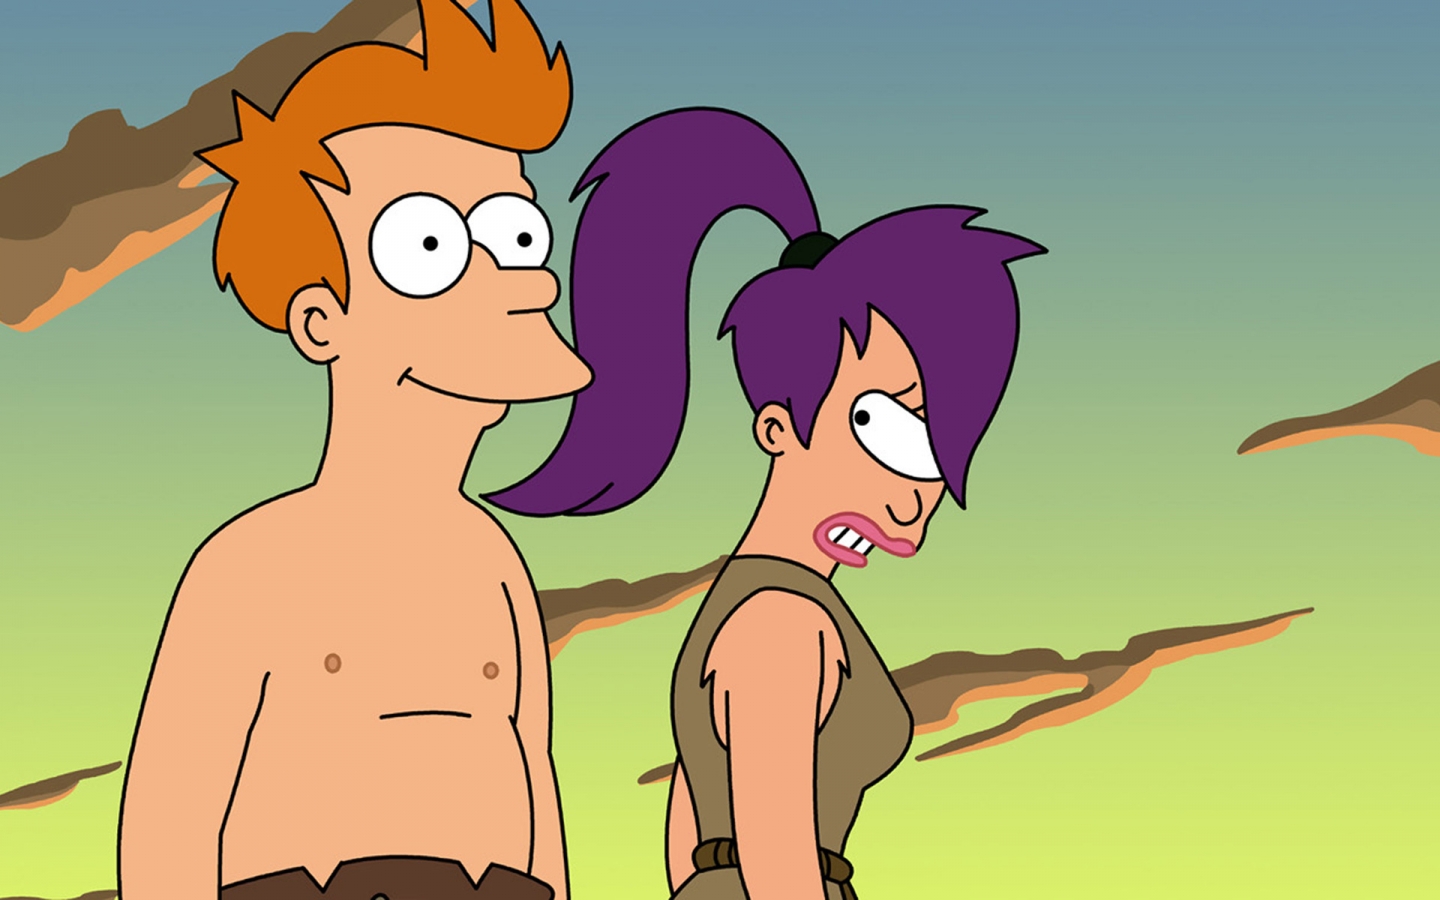 Futurama Fry and Leela for 1440 x 900 widescreen resolution